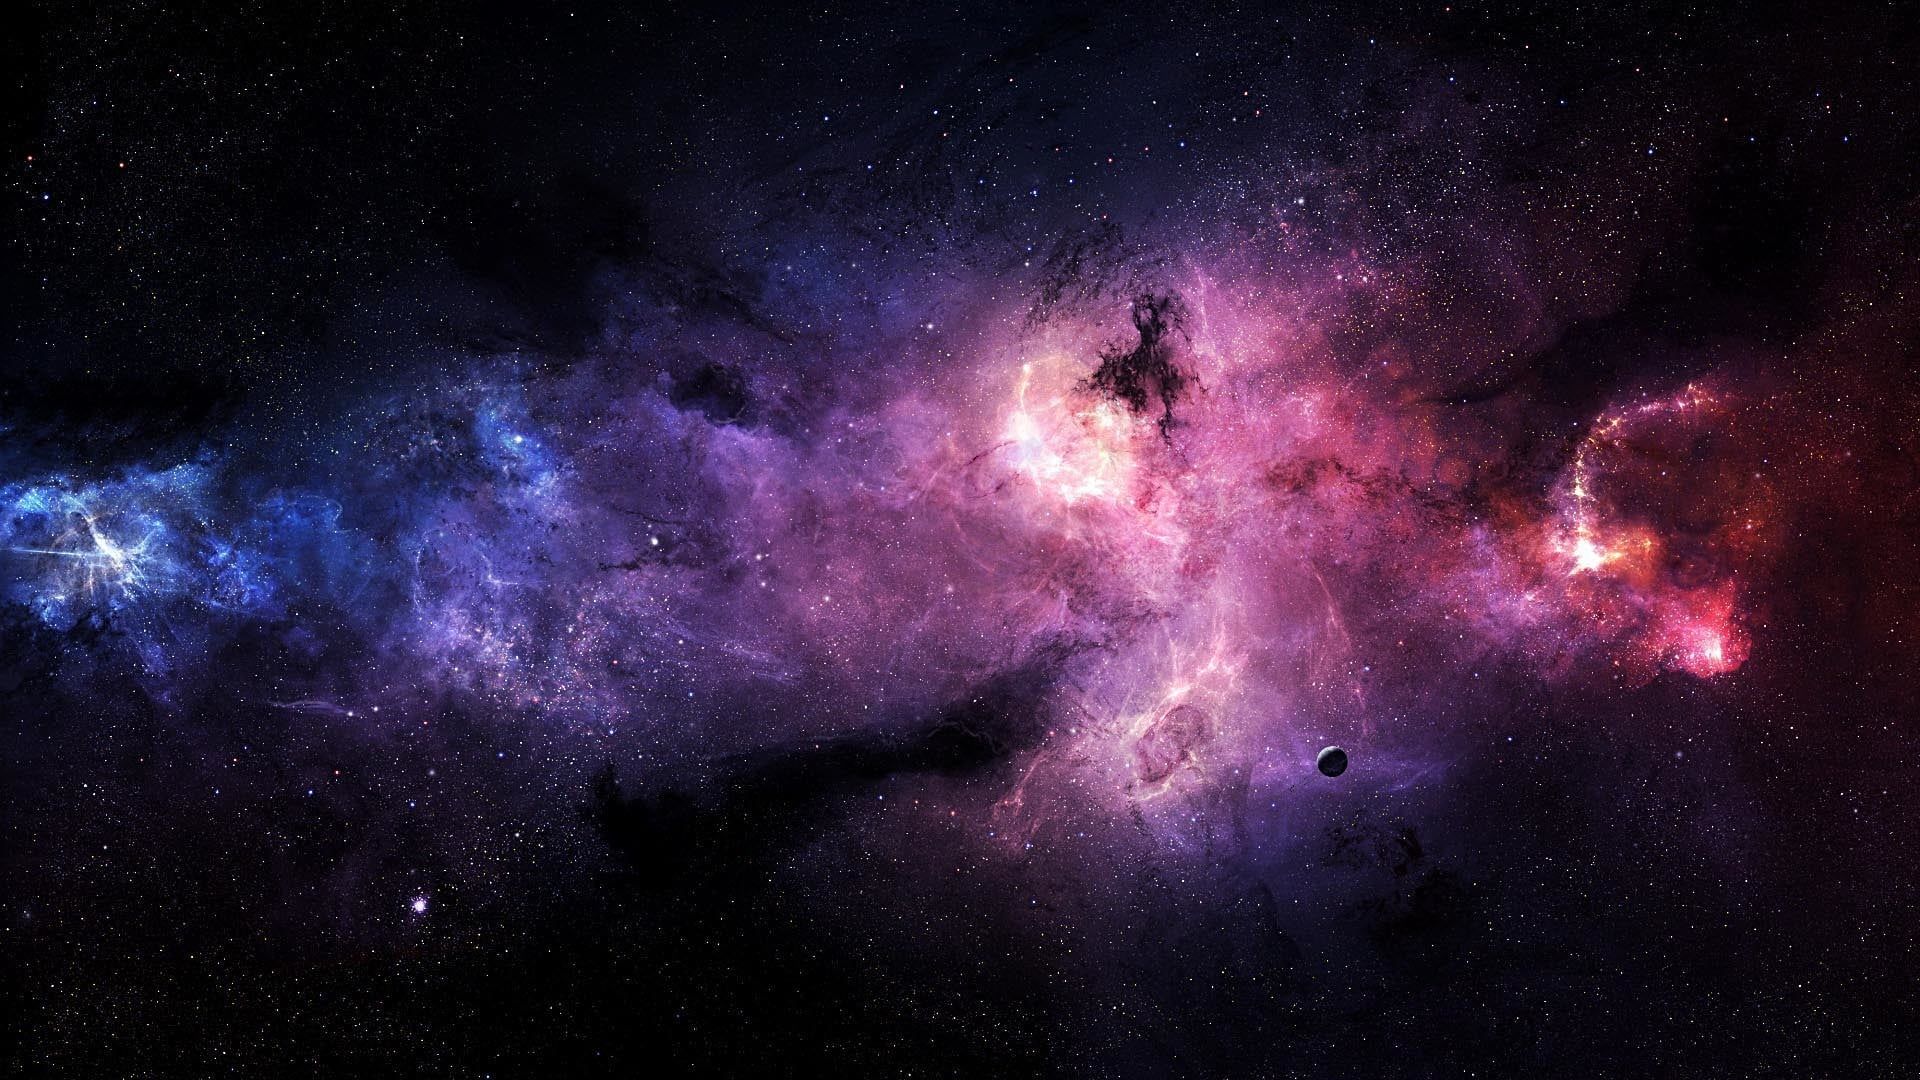 galaxy wallpaper #space #galaxy #pink #blue #colorful #nebula digital art #stars space art. Fond ecran galaxie, Belle photographie de paysage, Photo ciel étoilé